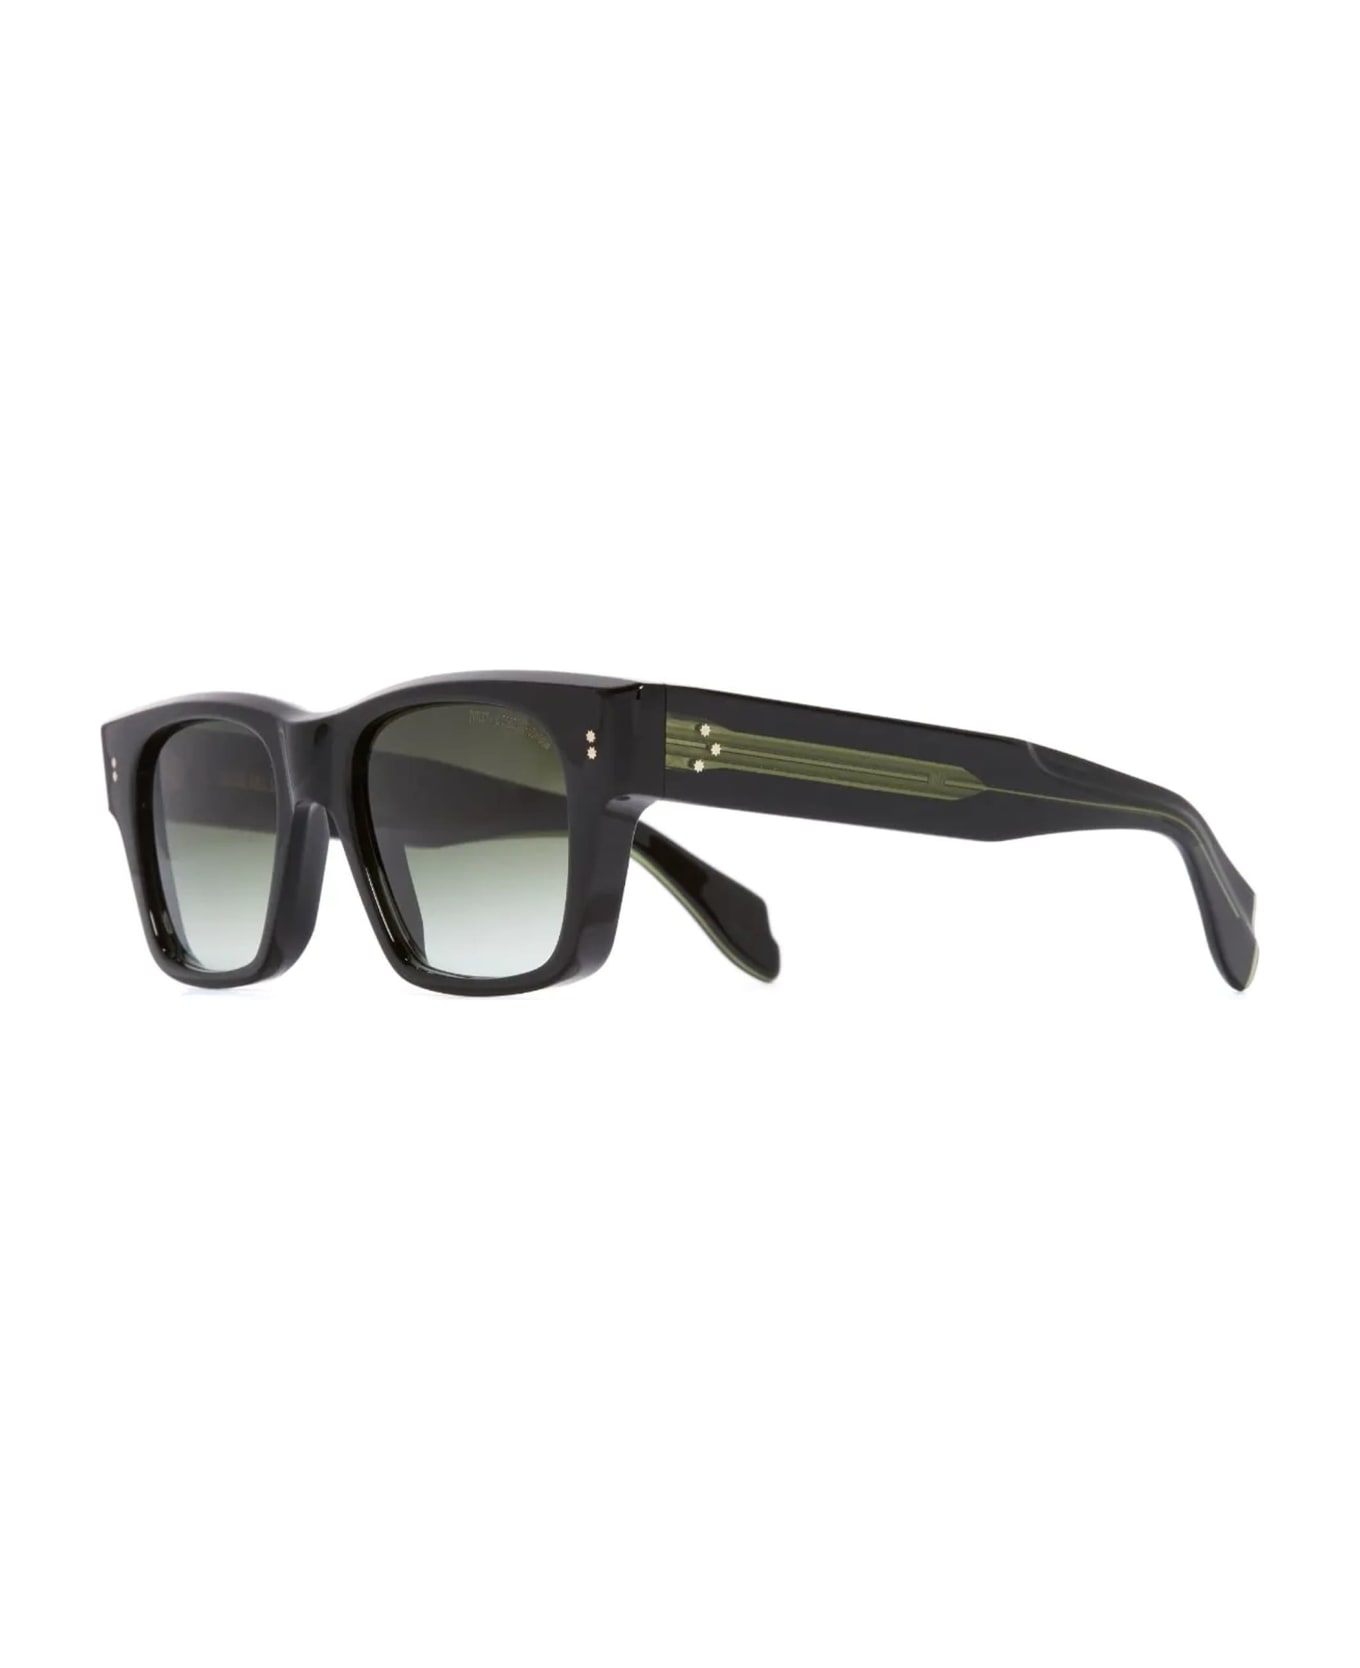 Cutler and Gross 9690 / Black Sunglasses - Black サングラス